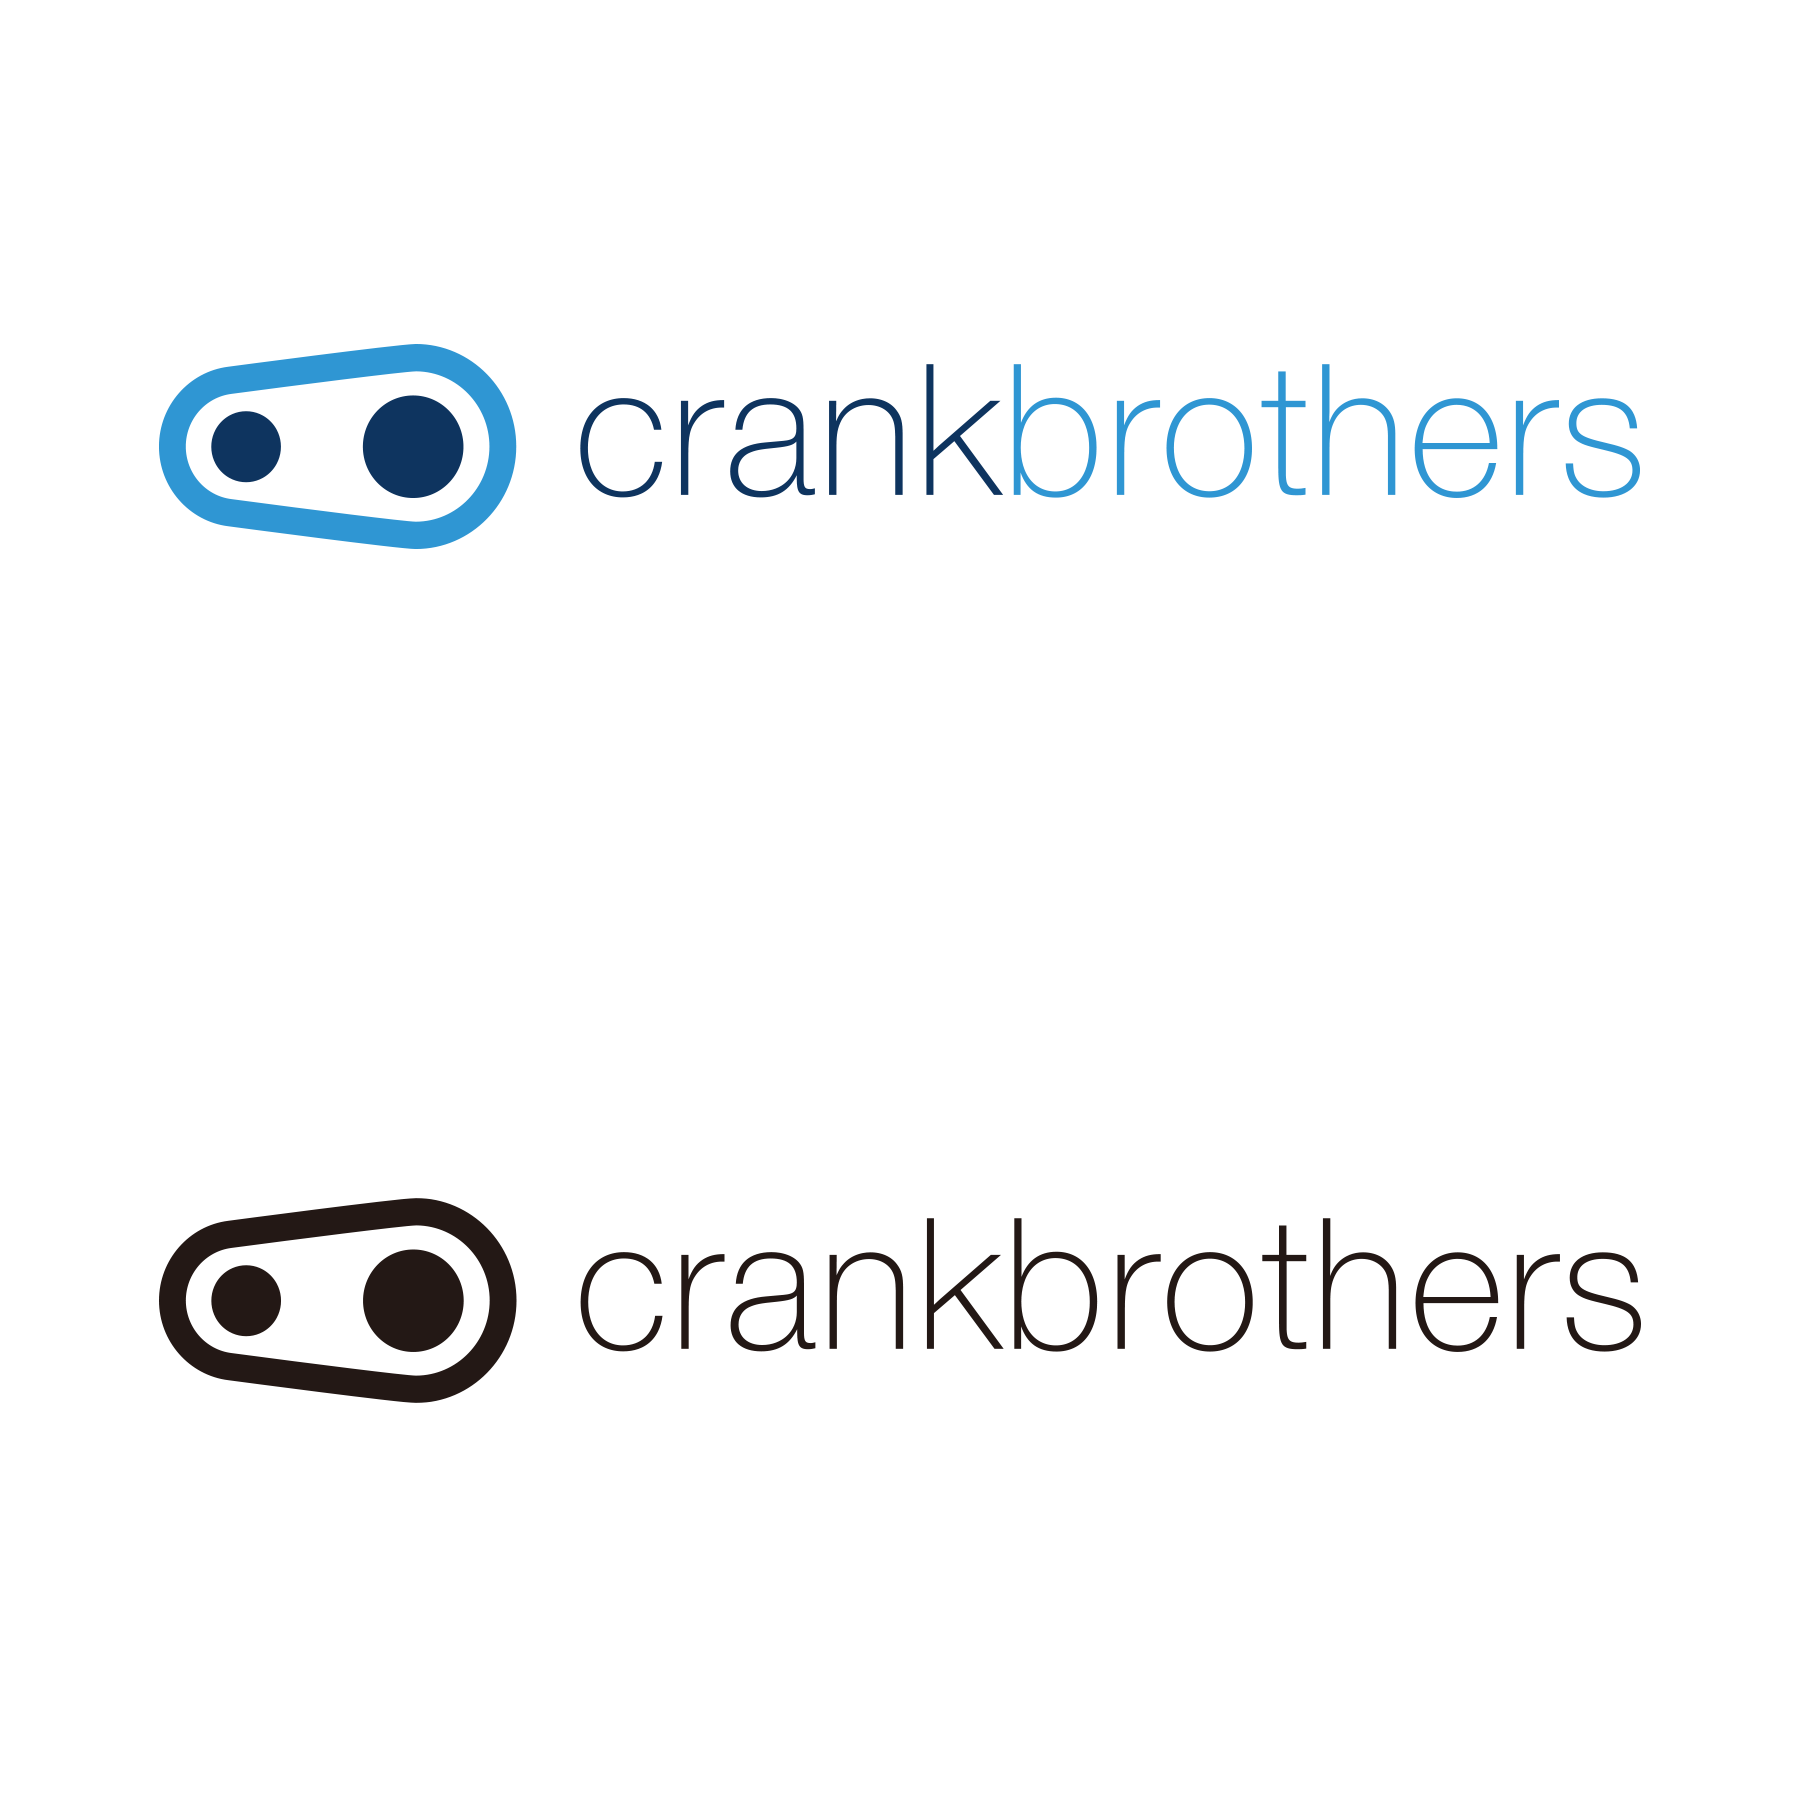 crankbrothers (クランクブラザーズ)LOGO Image